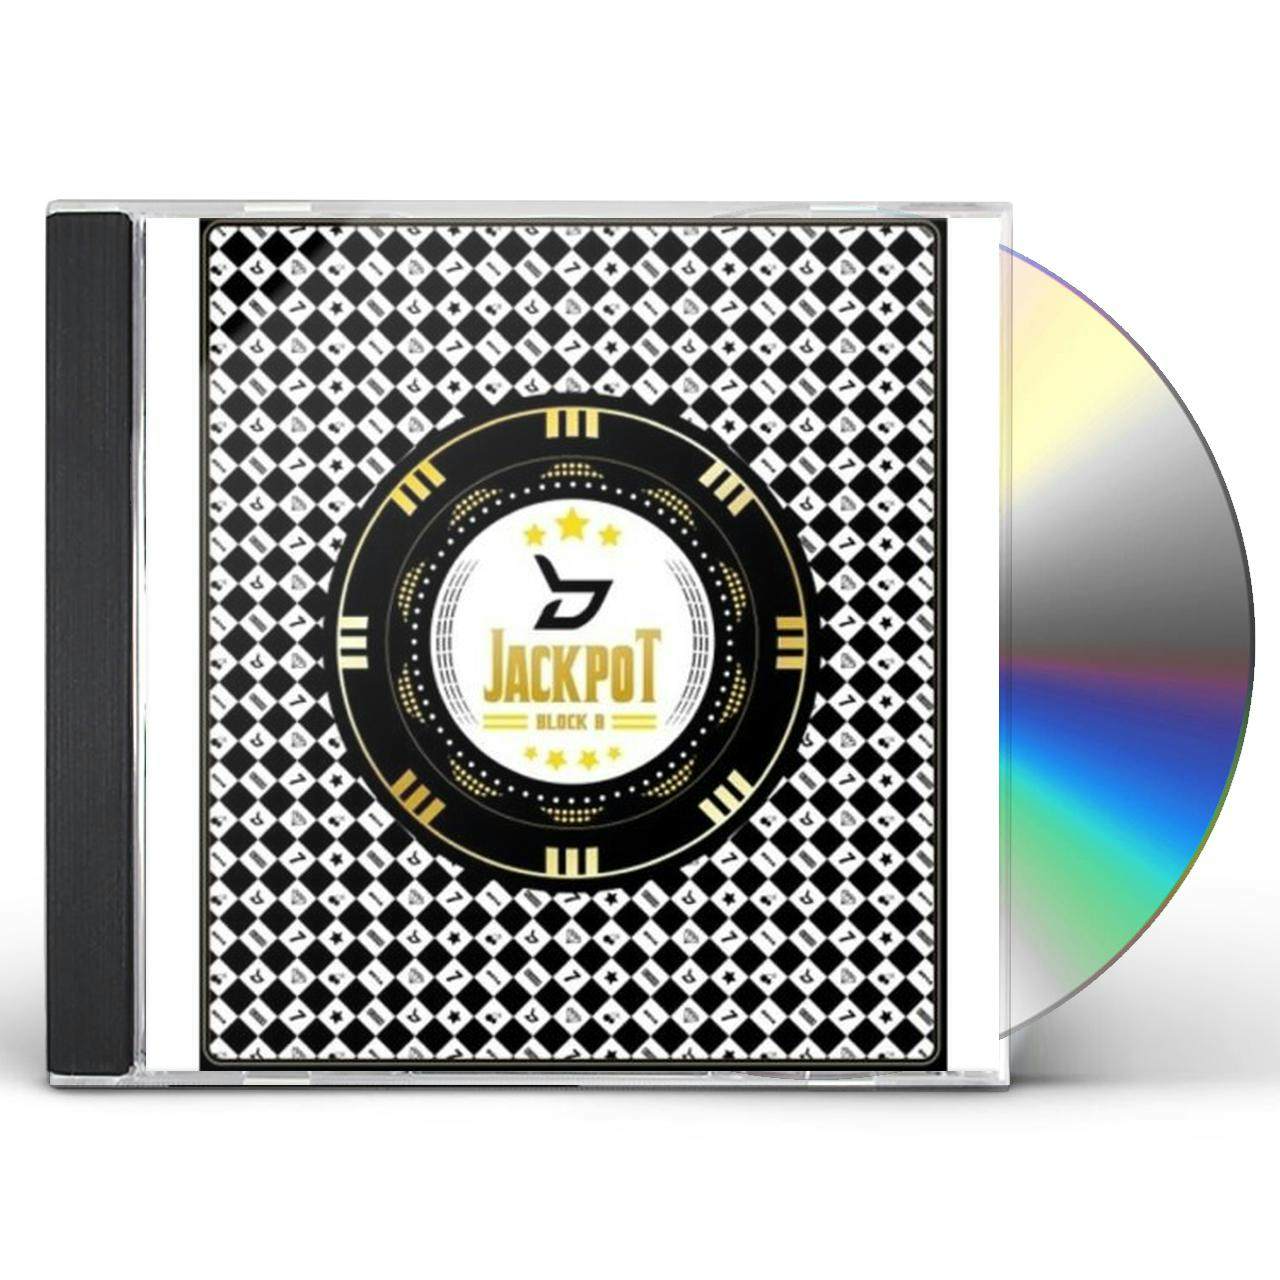 gray korean album cover